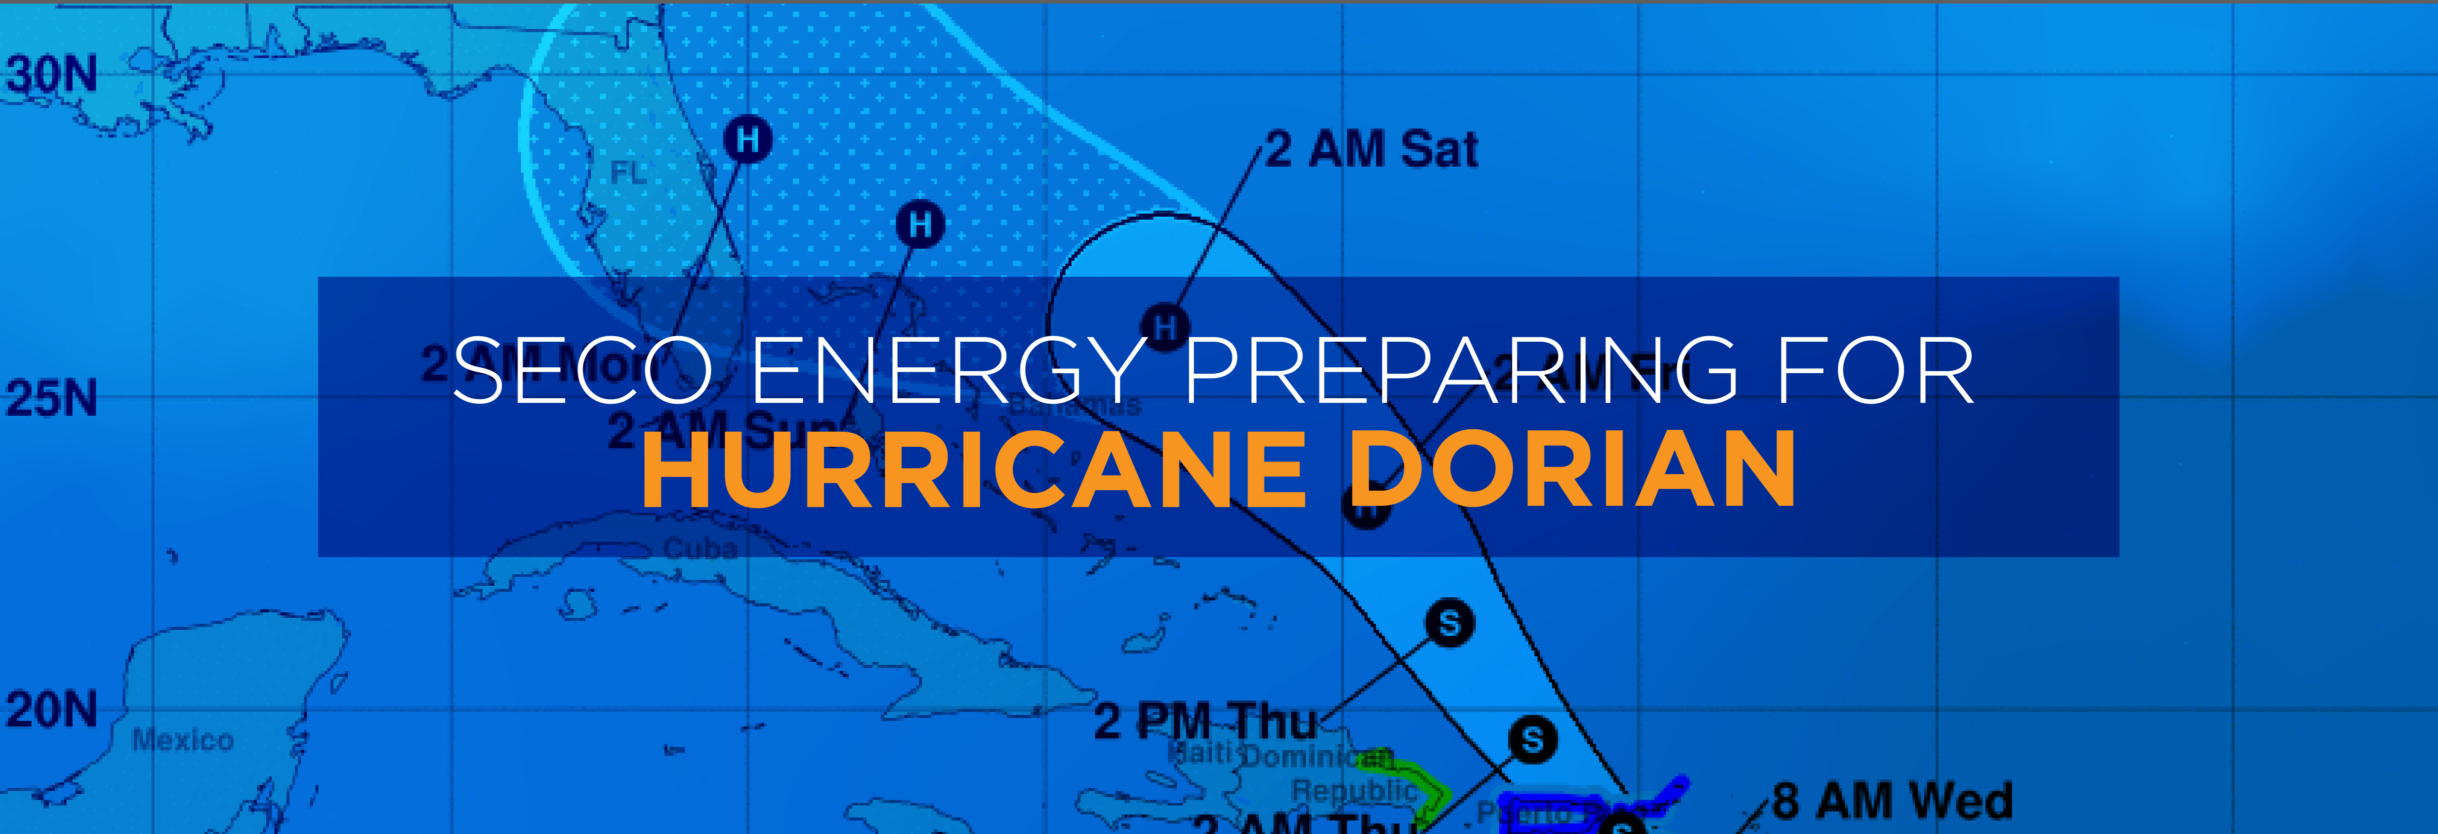 SECO Energy Preparing for Hurricane Dorian